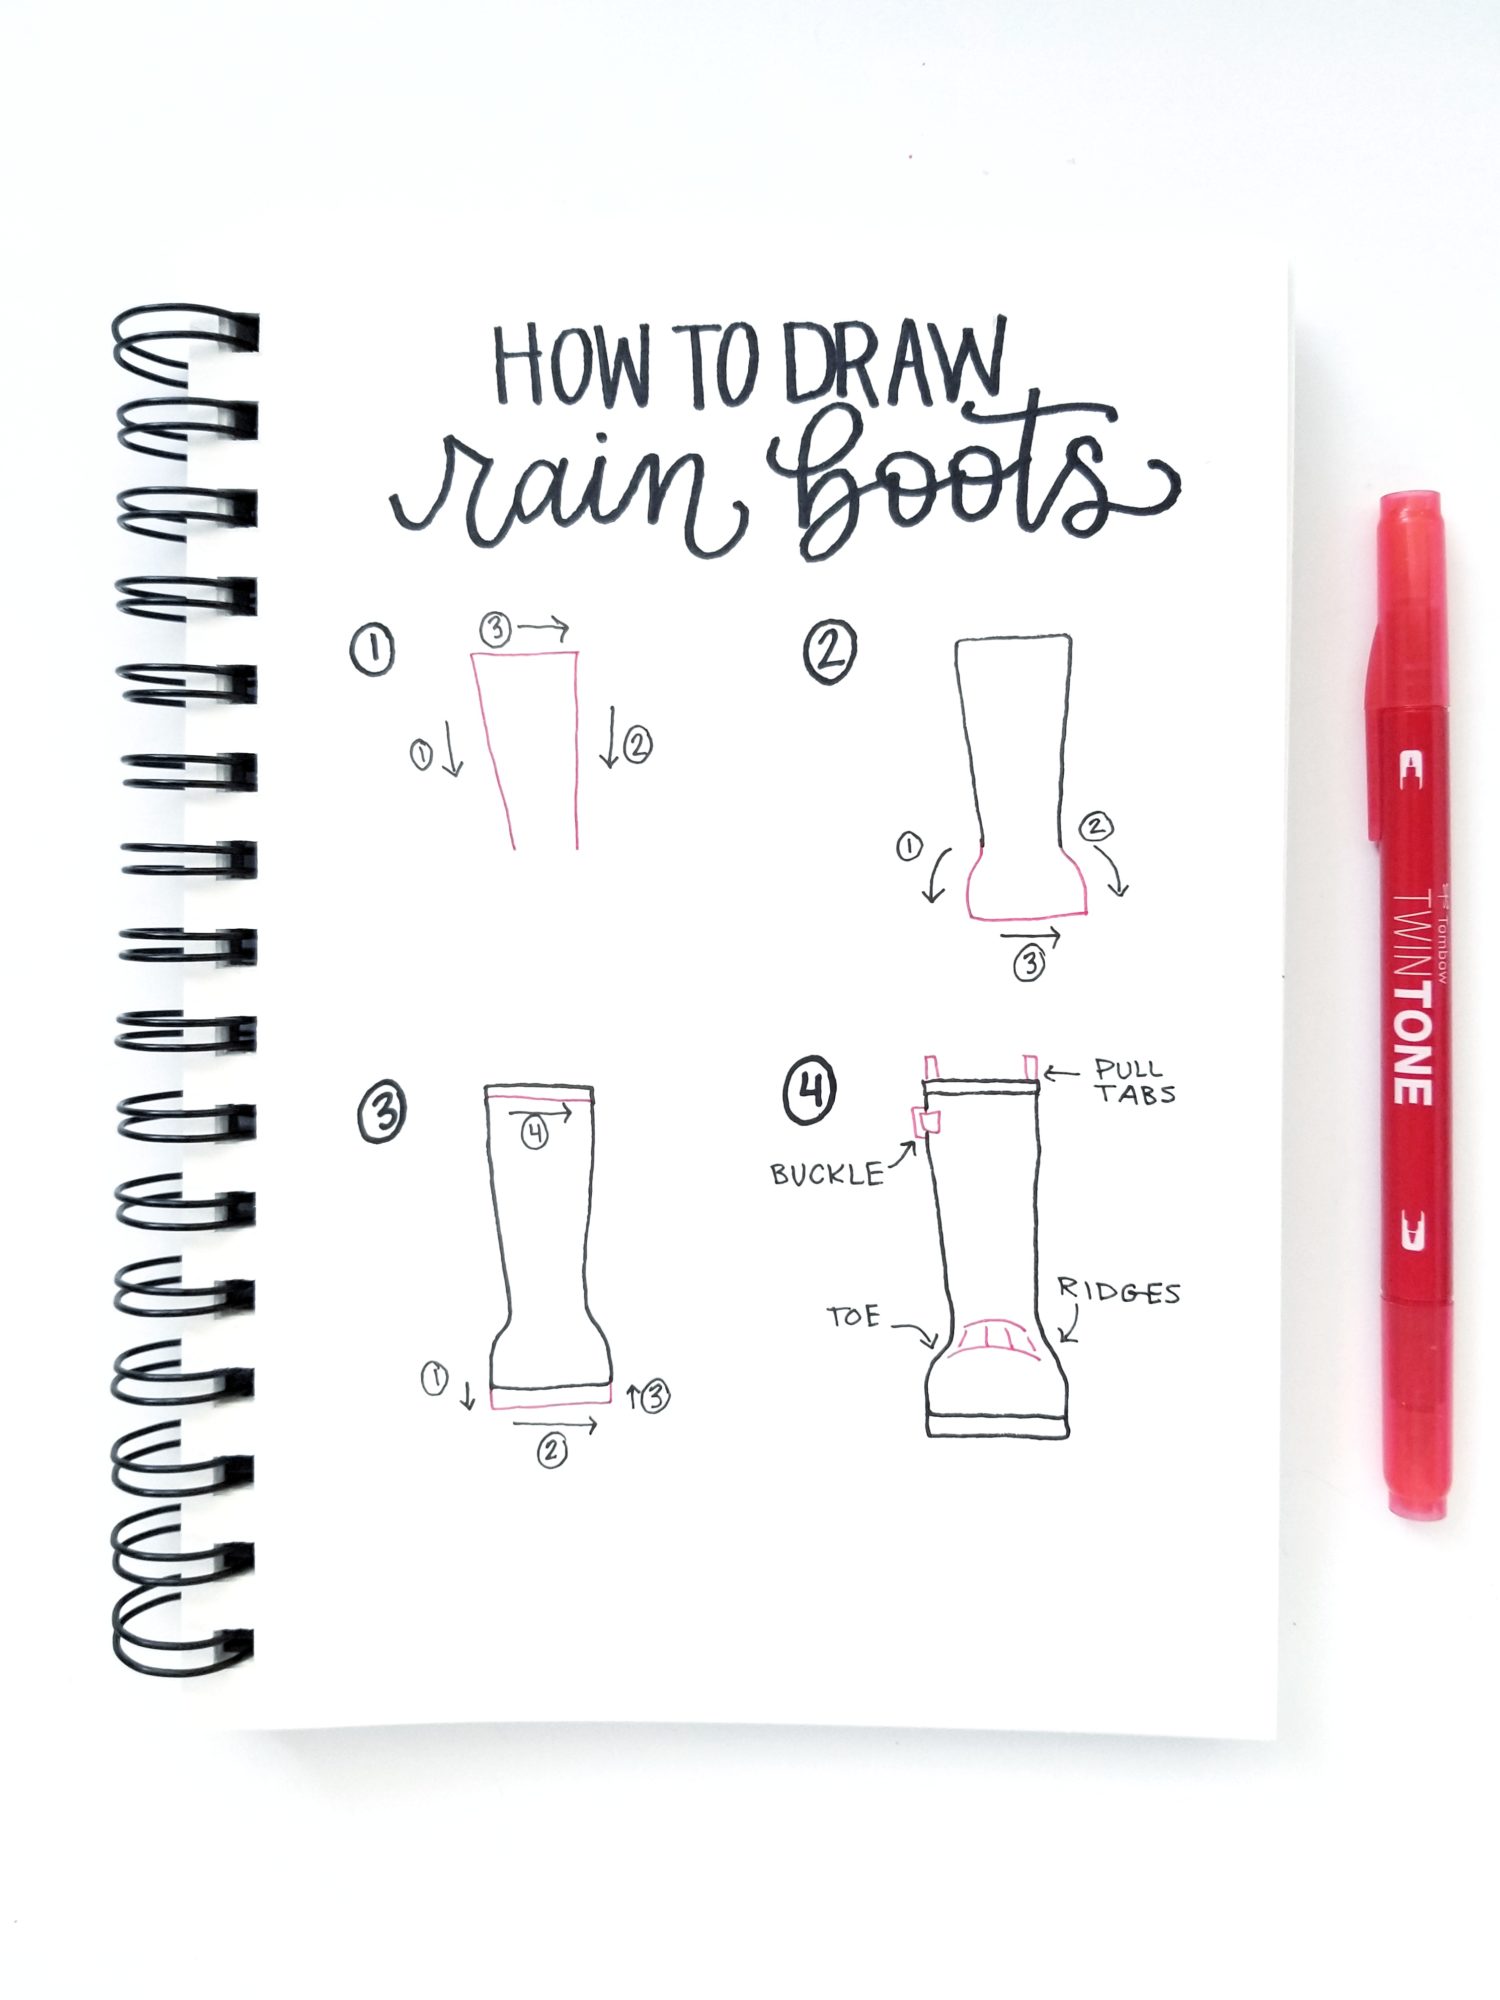 Three Ways to Draw Rain Boots LaptrinhX / News